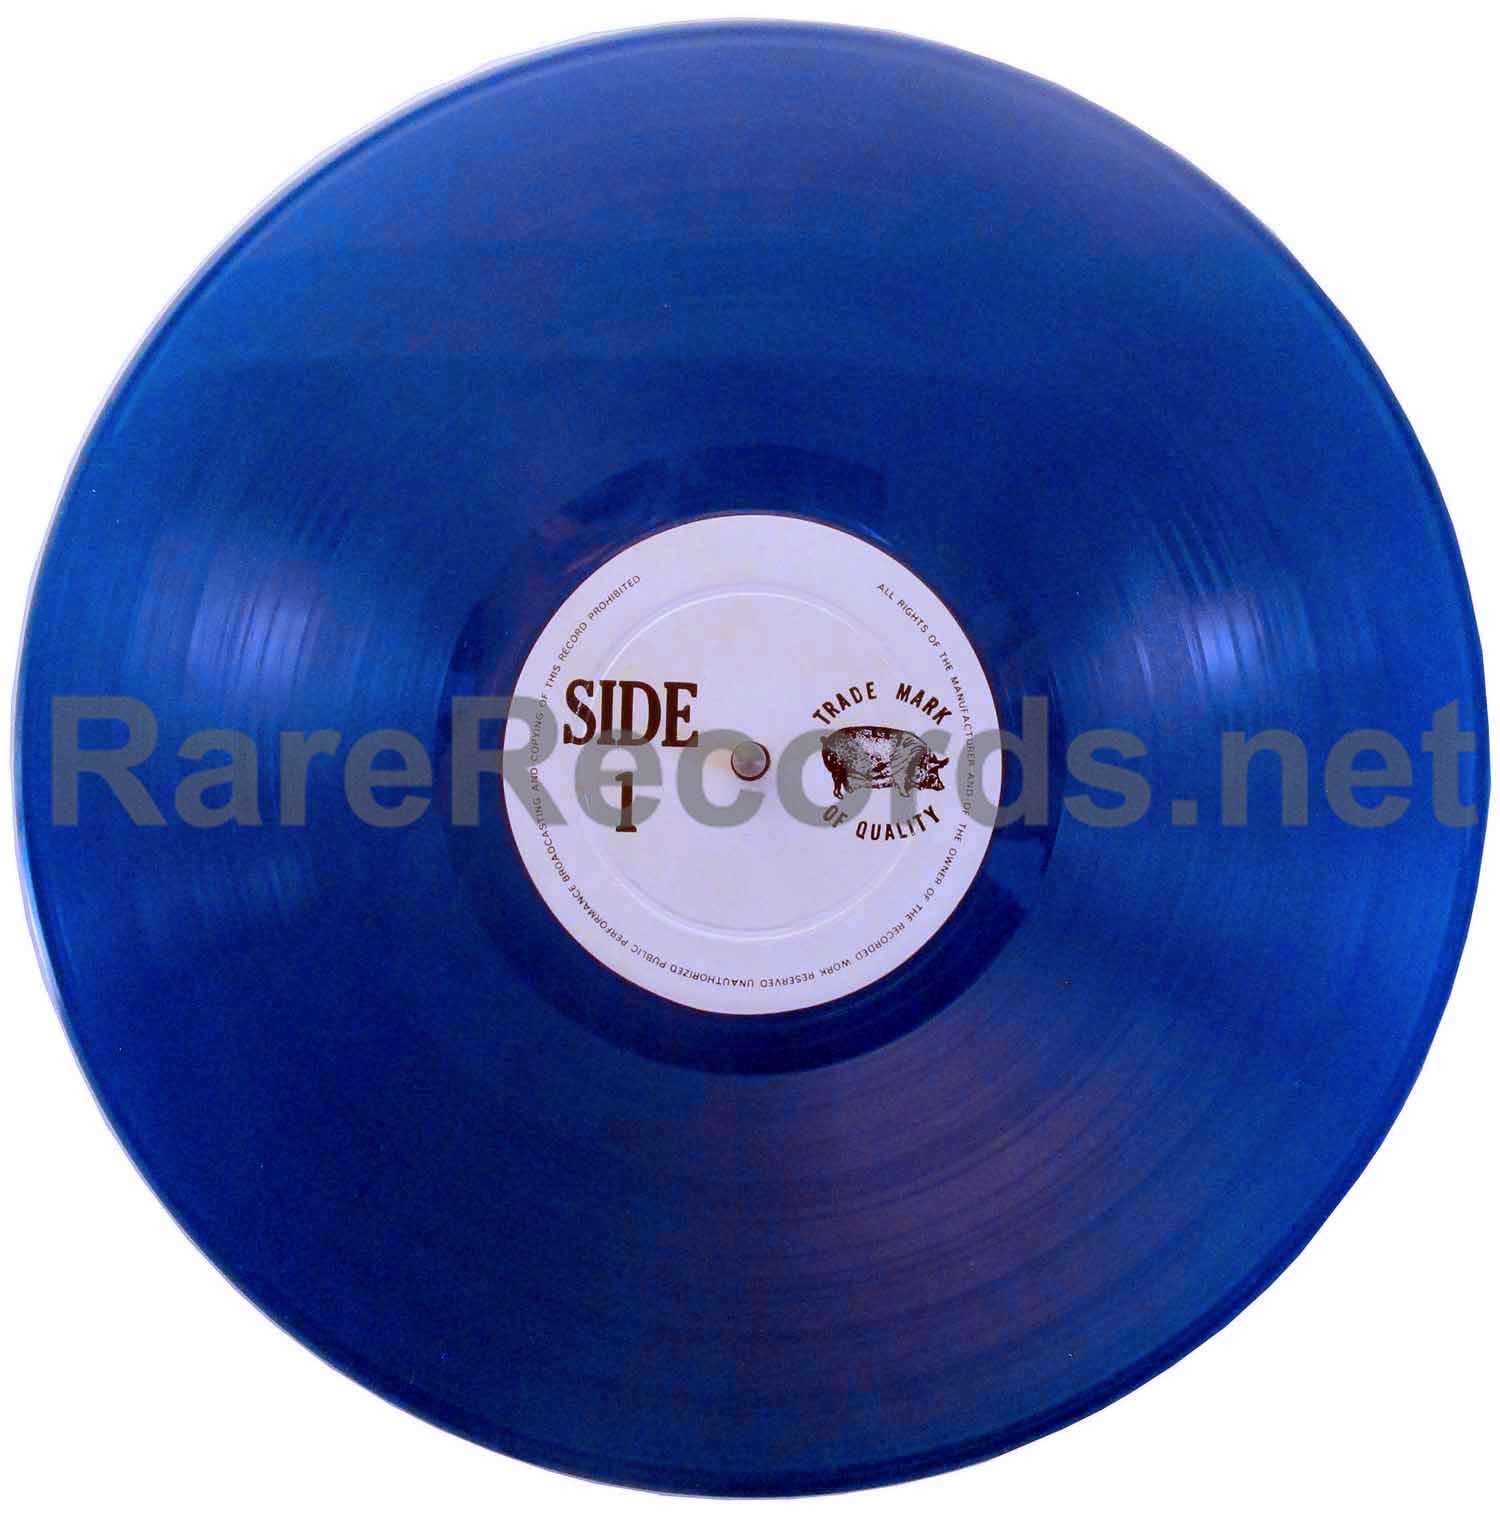 Led Zeppelin - Live on Blueberry Hill 1972 U.S. blue/red vinyl live  Trademark of Quality 2 LP set